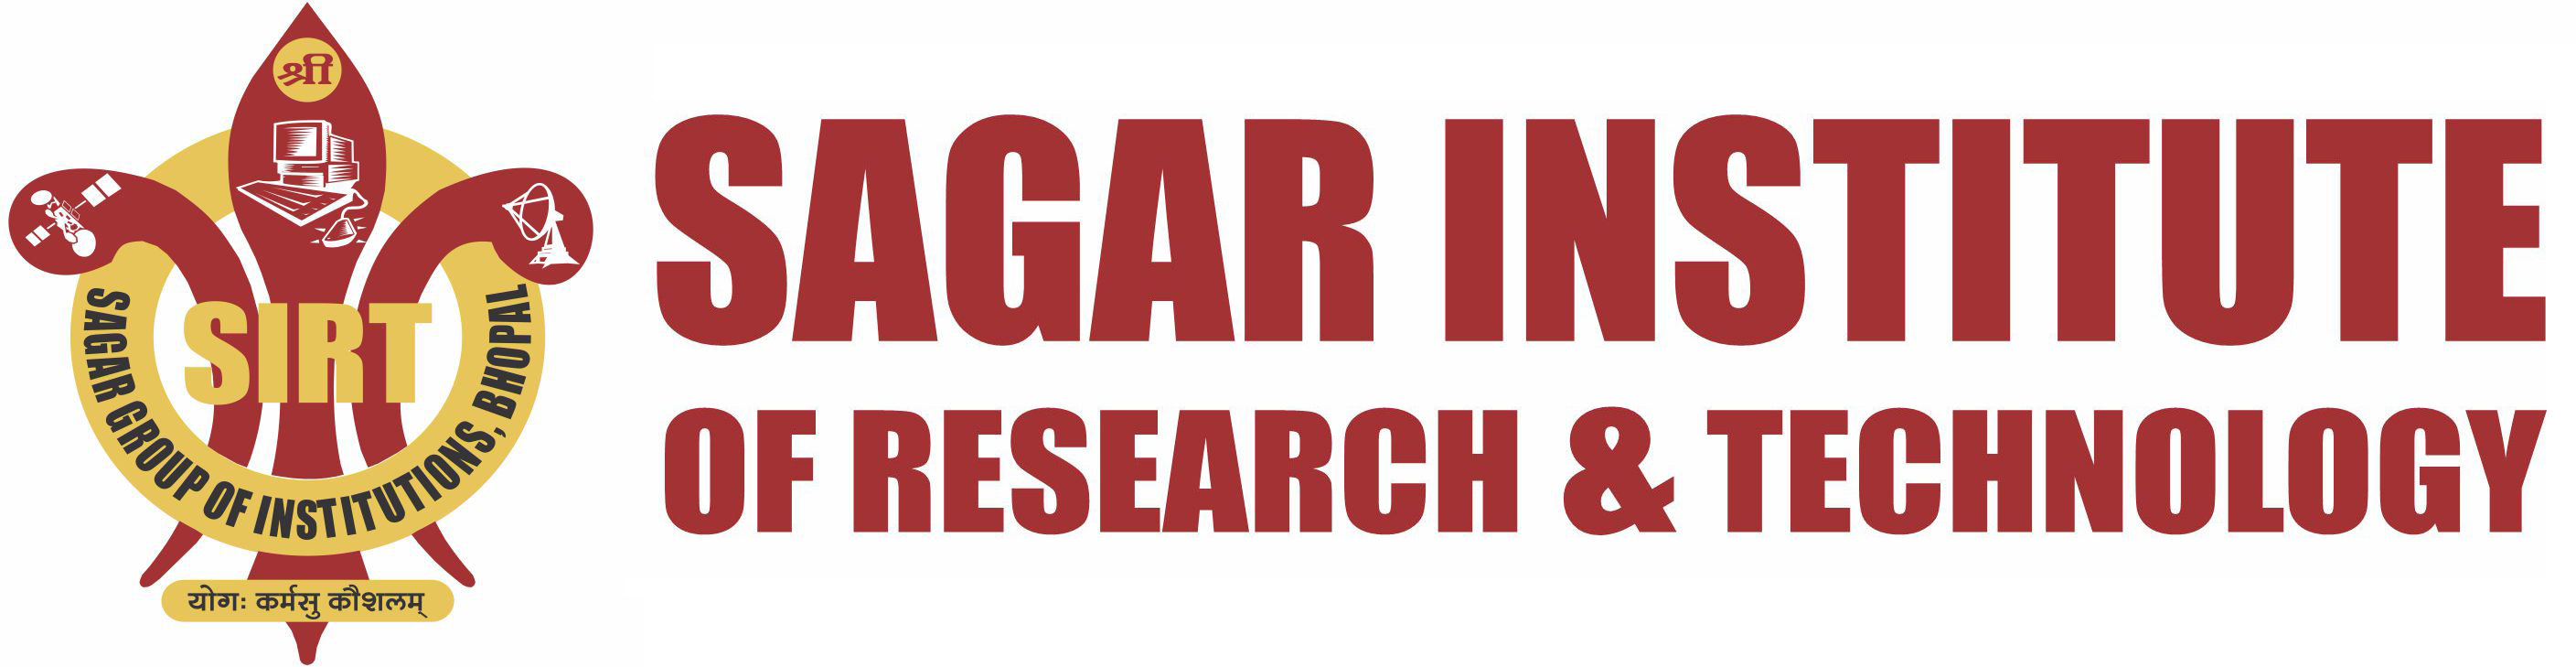 Sagar Institute of Research & Technology (SIRT)